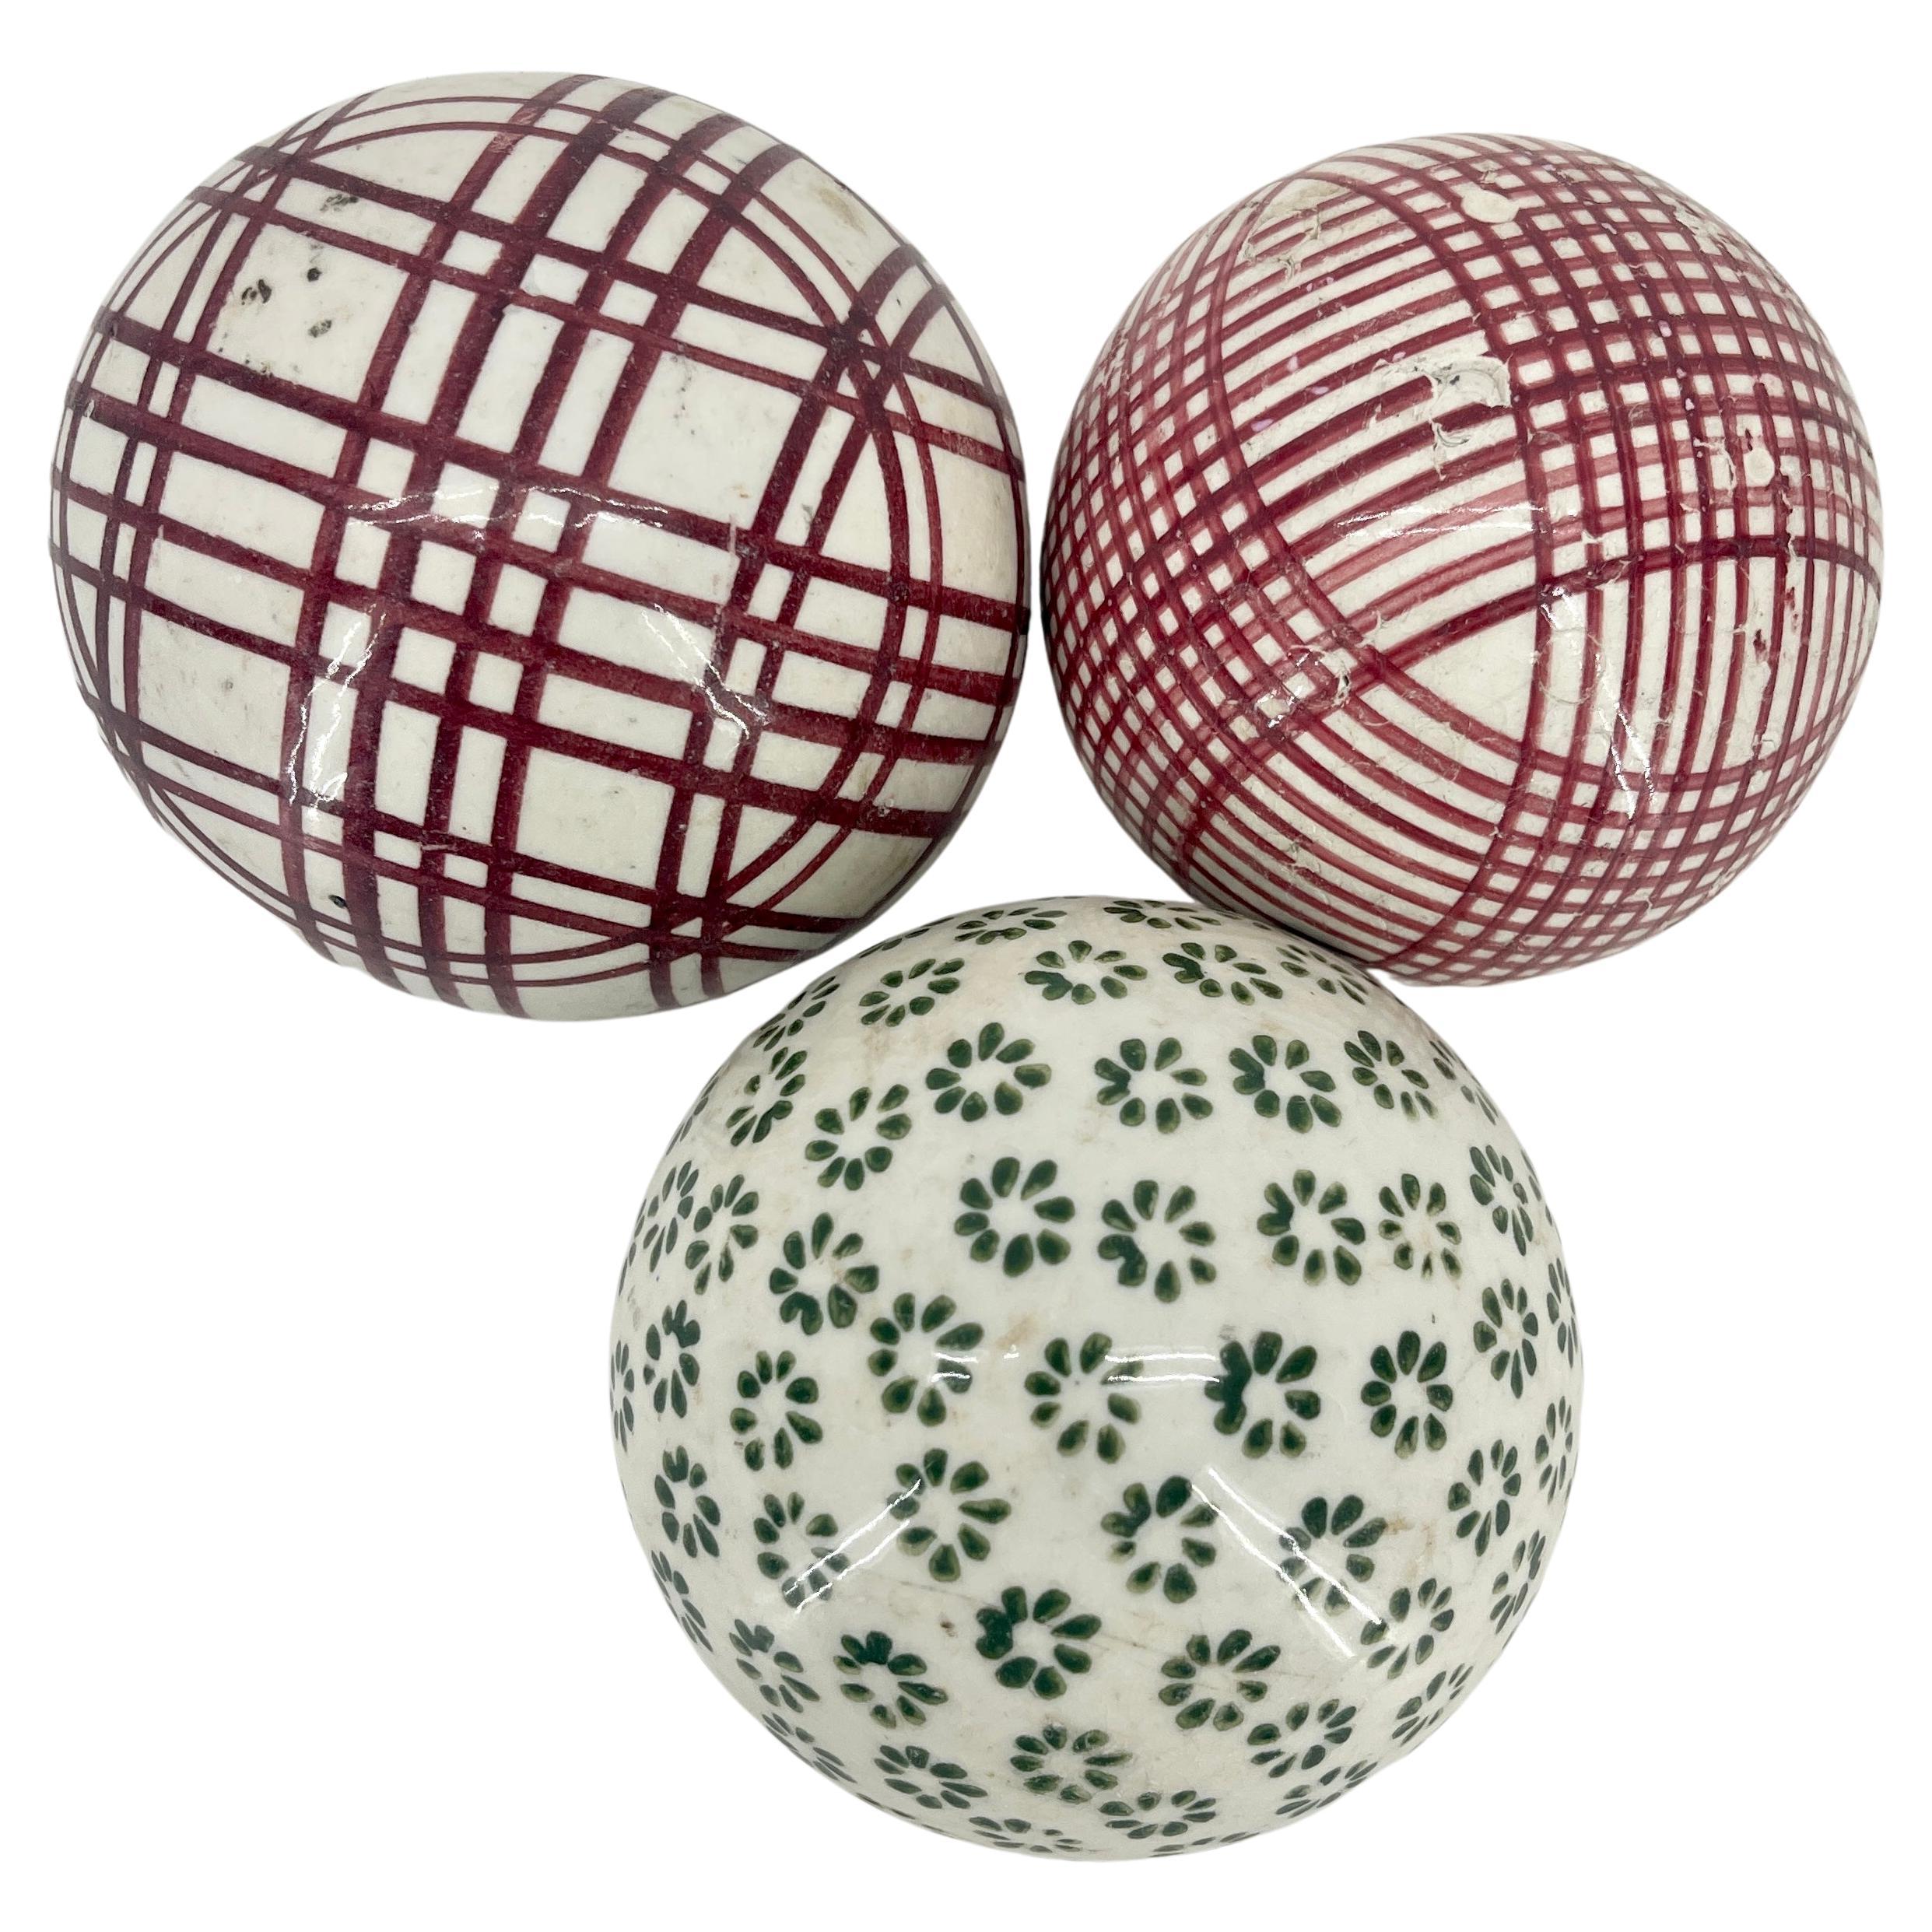 carpet balls for sale